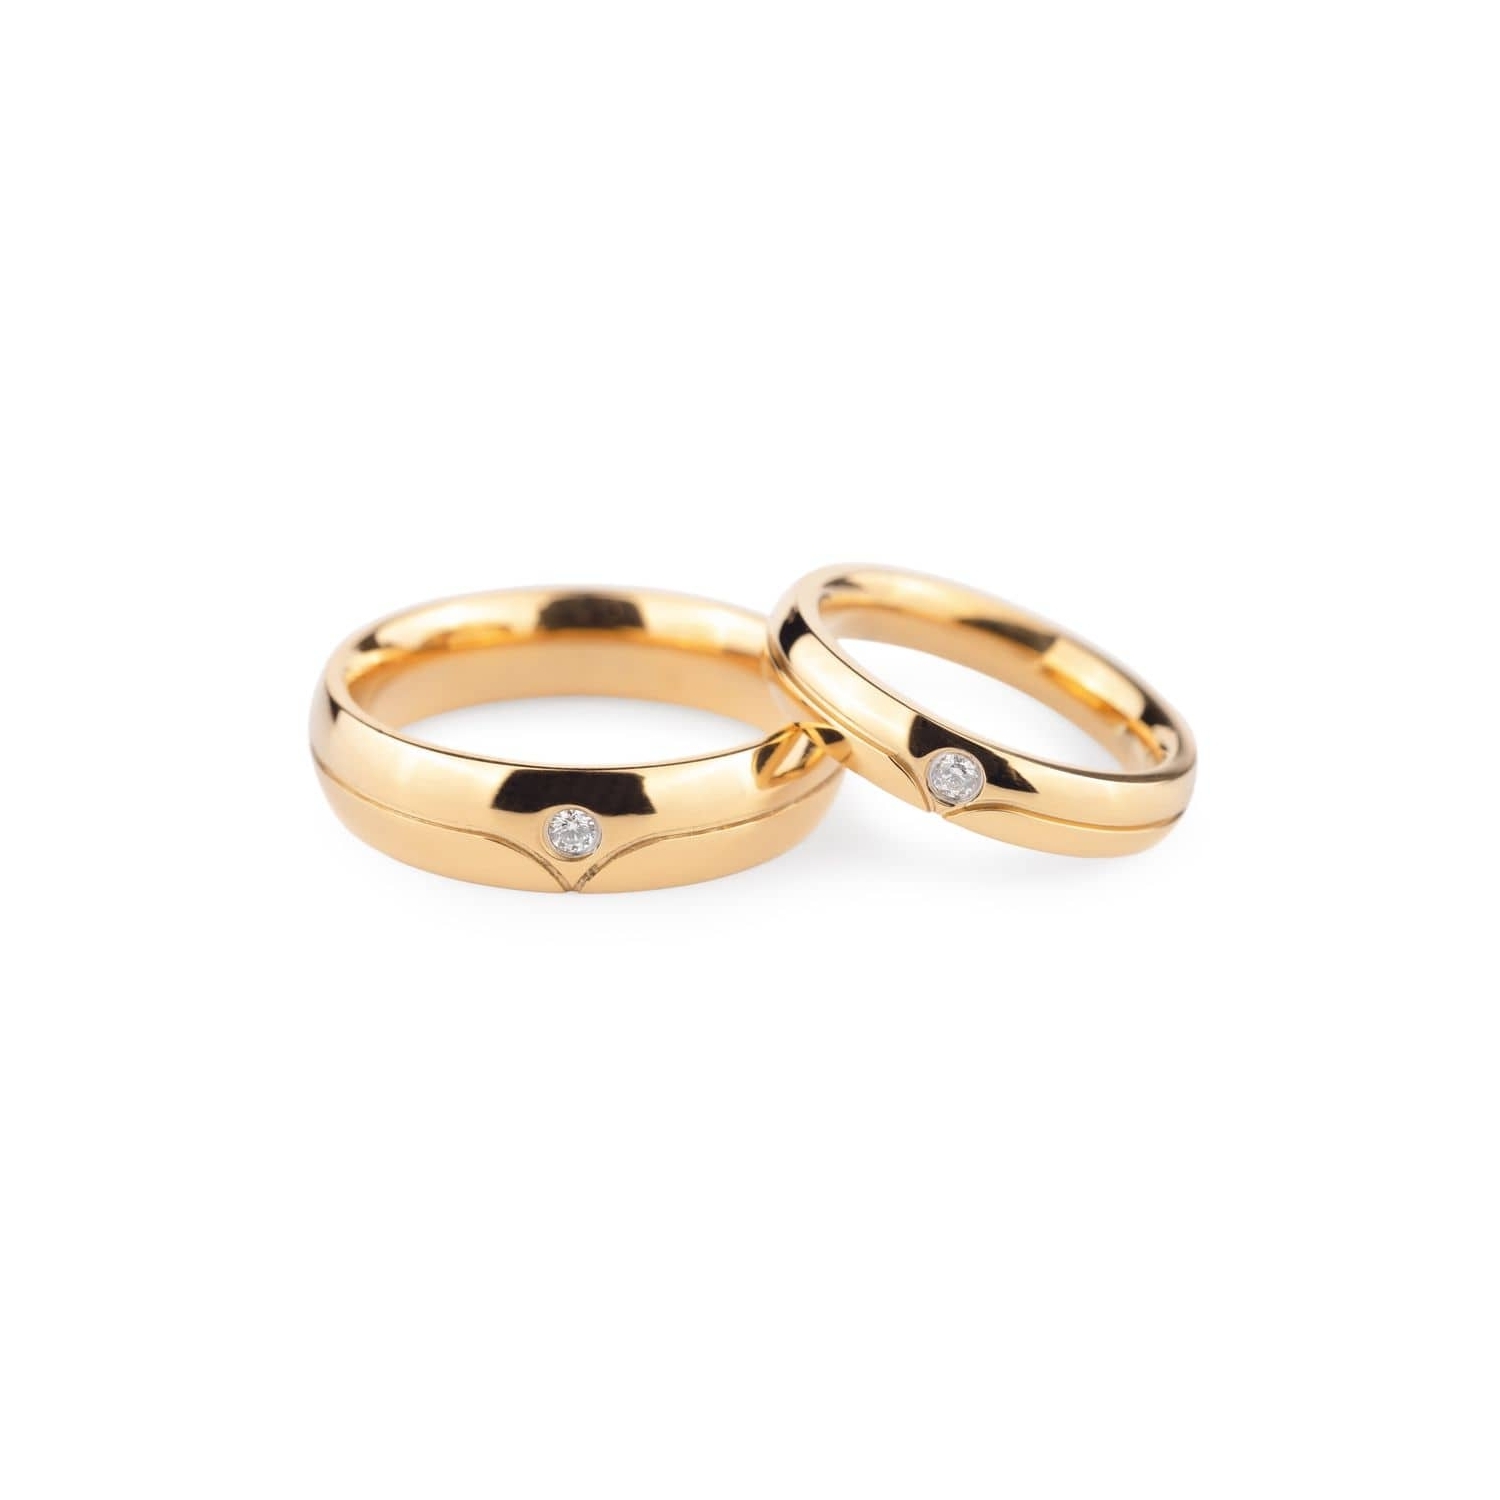 Golden wedding rings with diamonds "VKA 134"